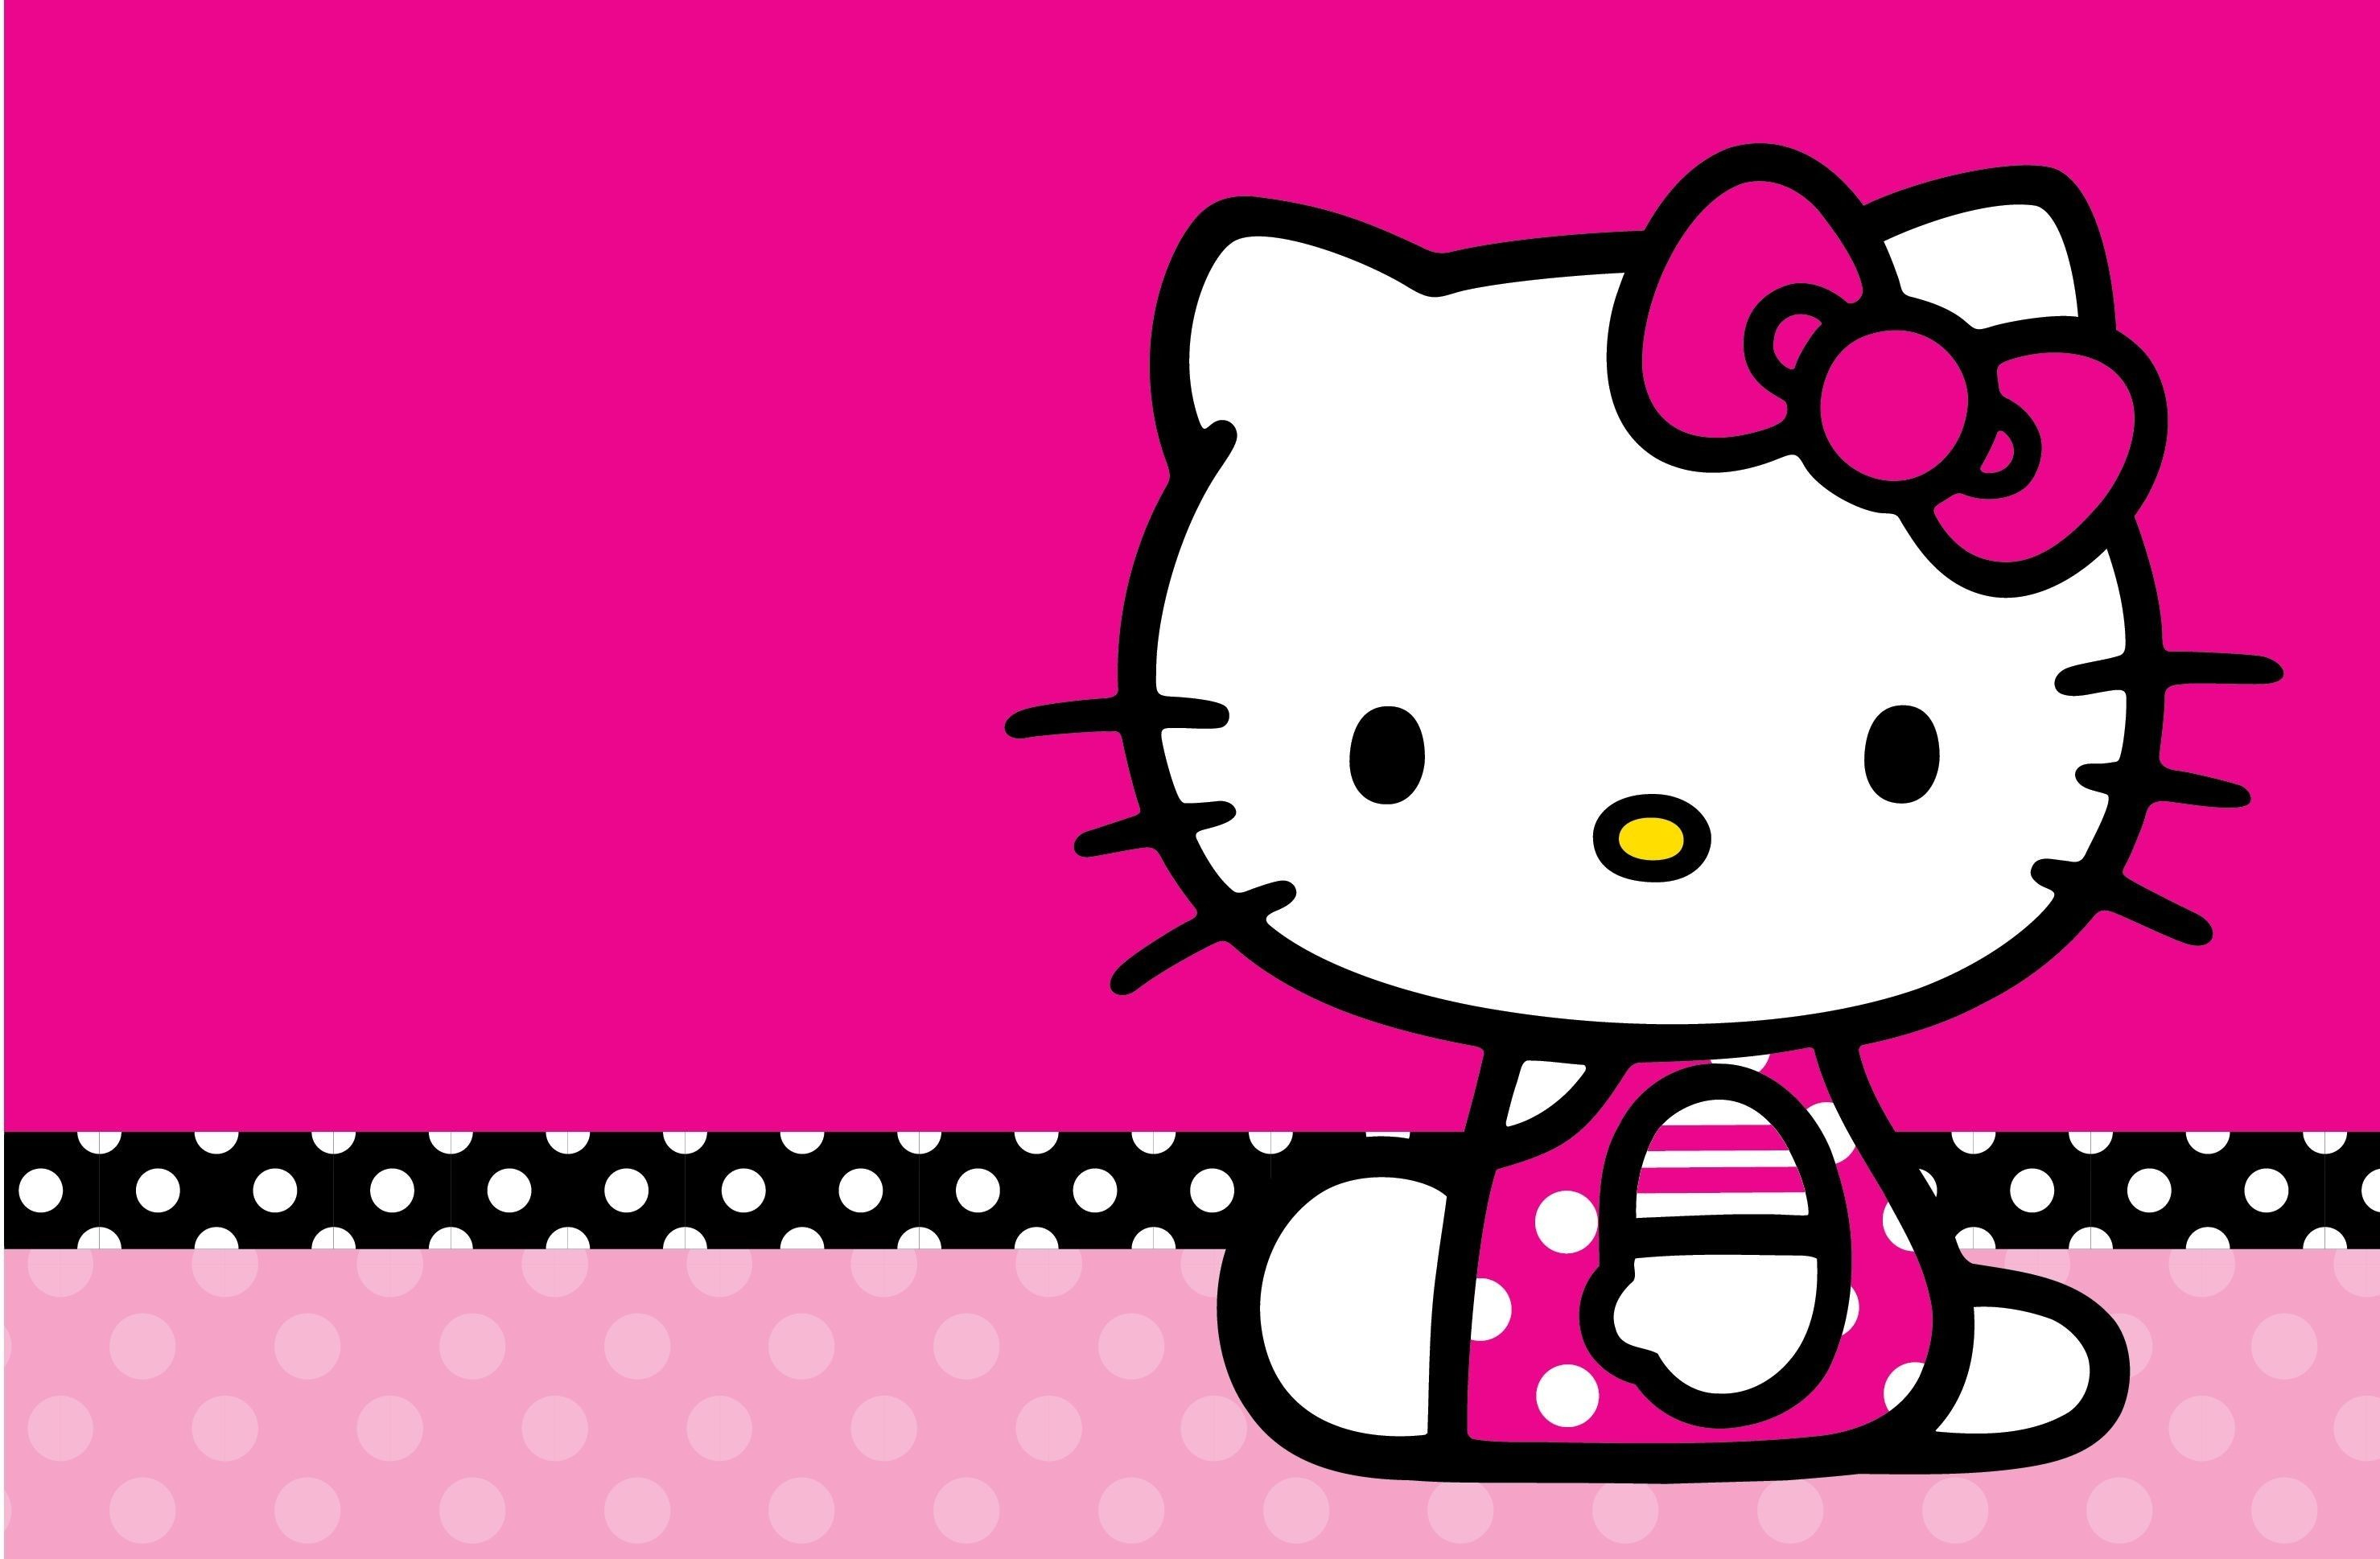 2958x1938 Hello Kitty Pink And Black Love Wallpaper Desktop Background ~ Yodobi | Hello kitty backgrounds, Hello kitty pictures, Hello kitty images